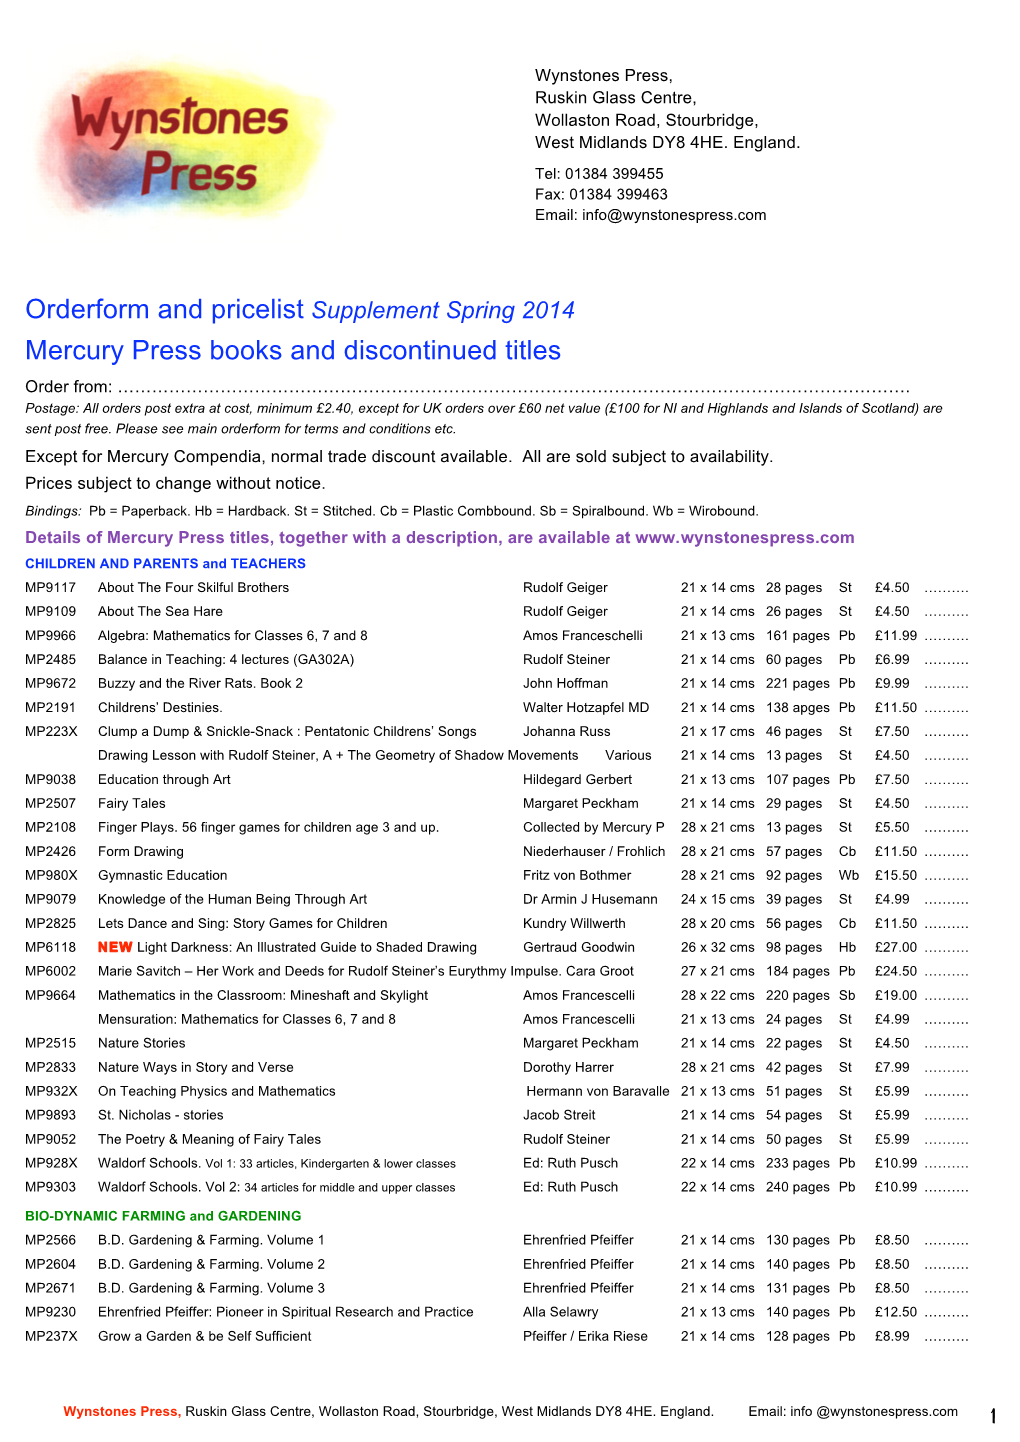 Orderform and Pricelist Supplement Spring 2014 Mercury Press Books